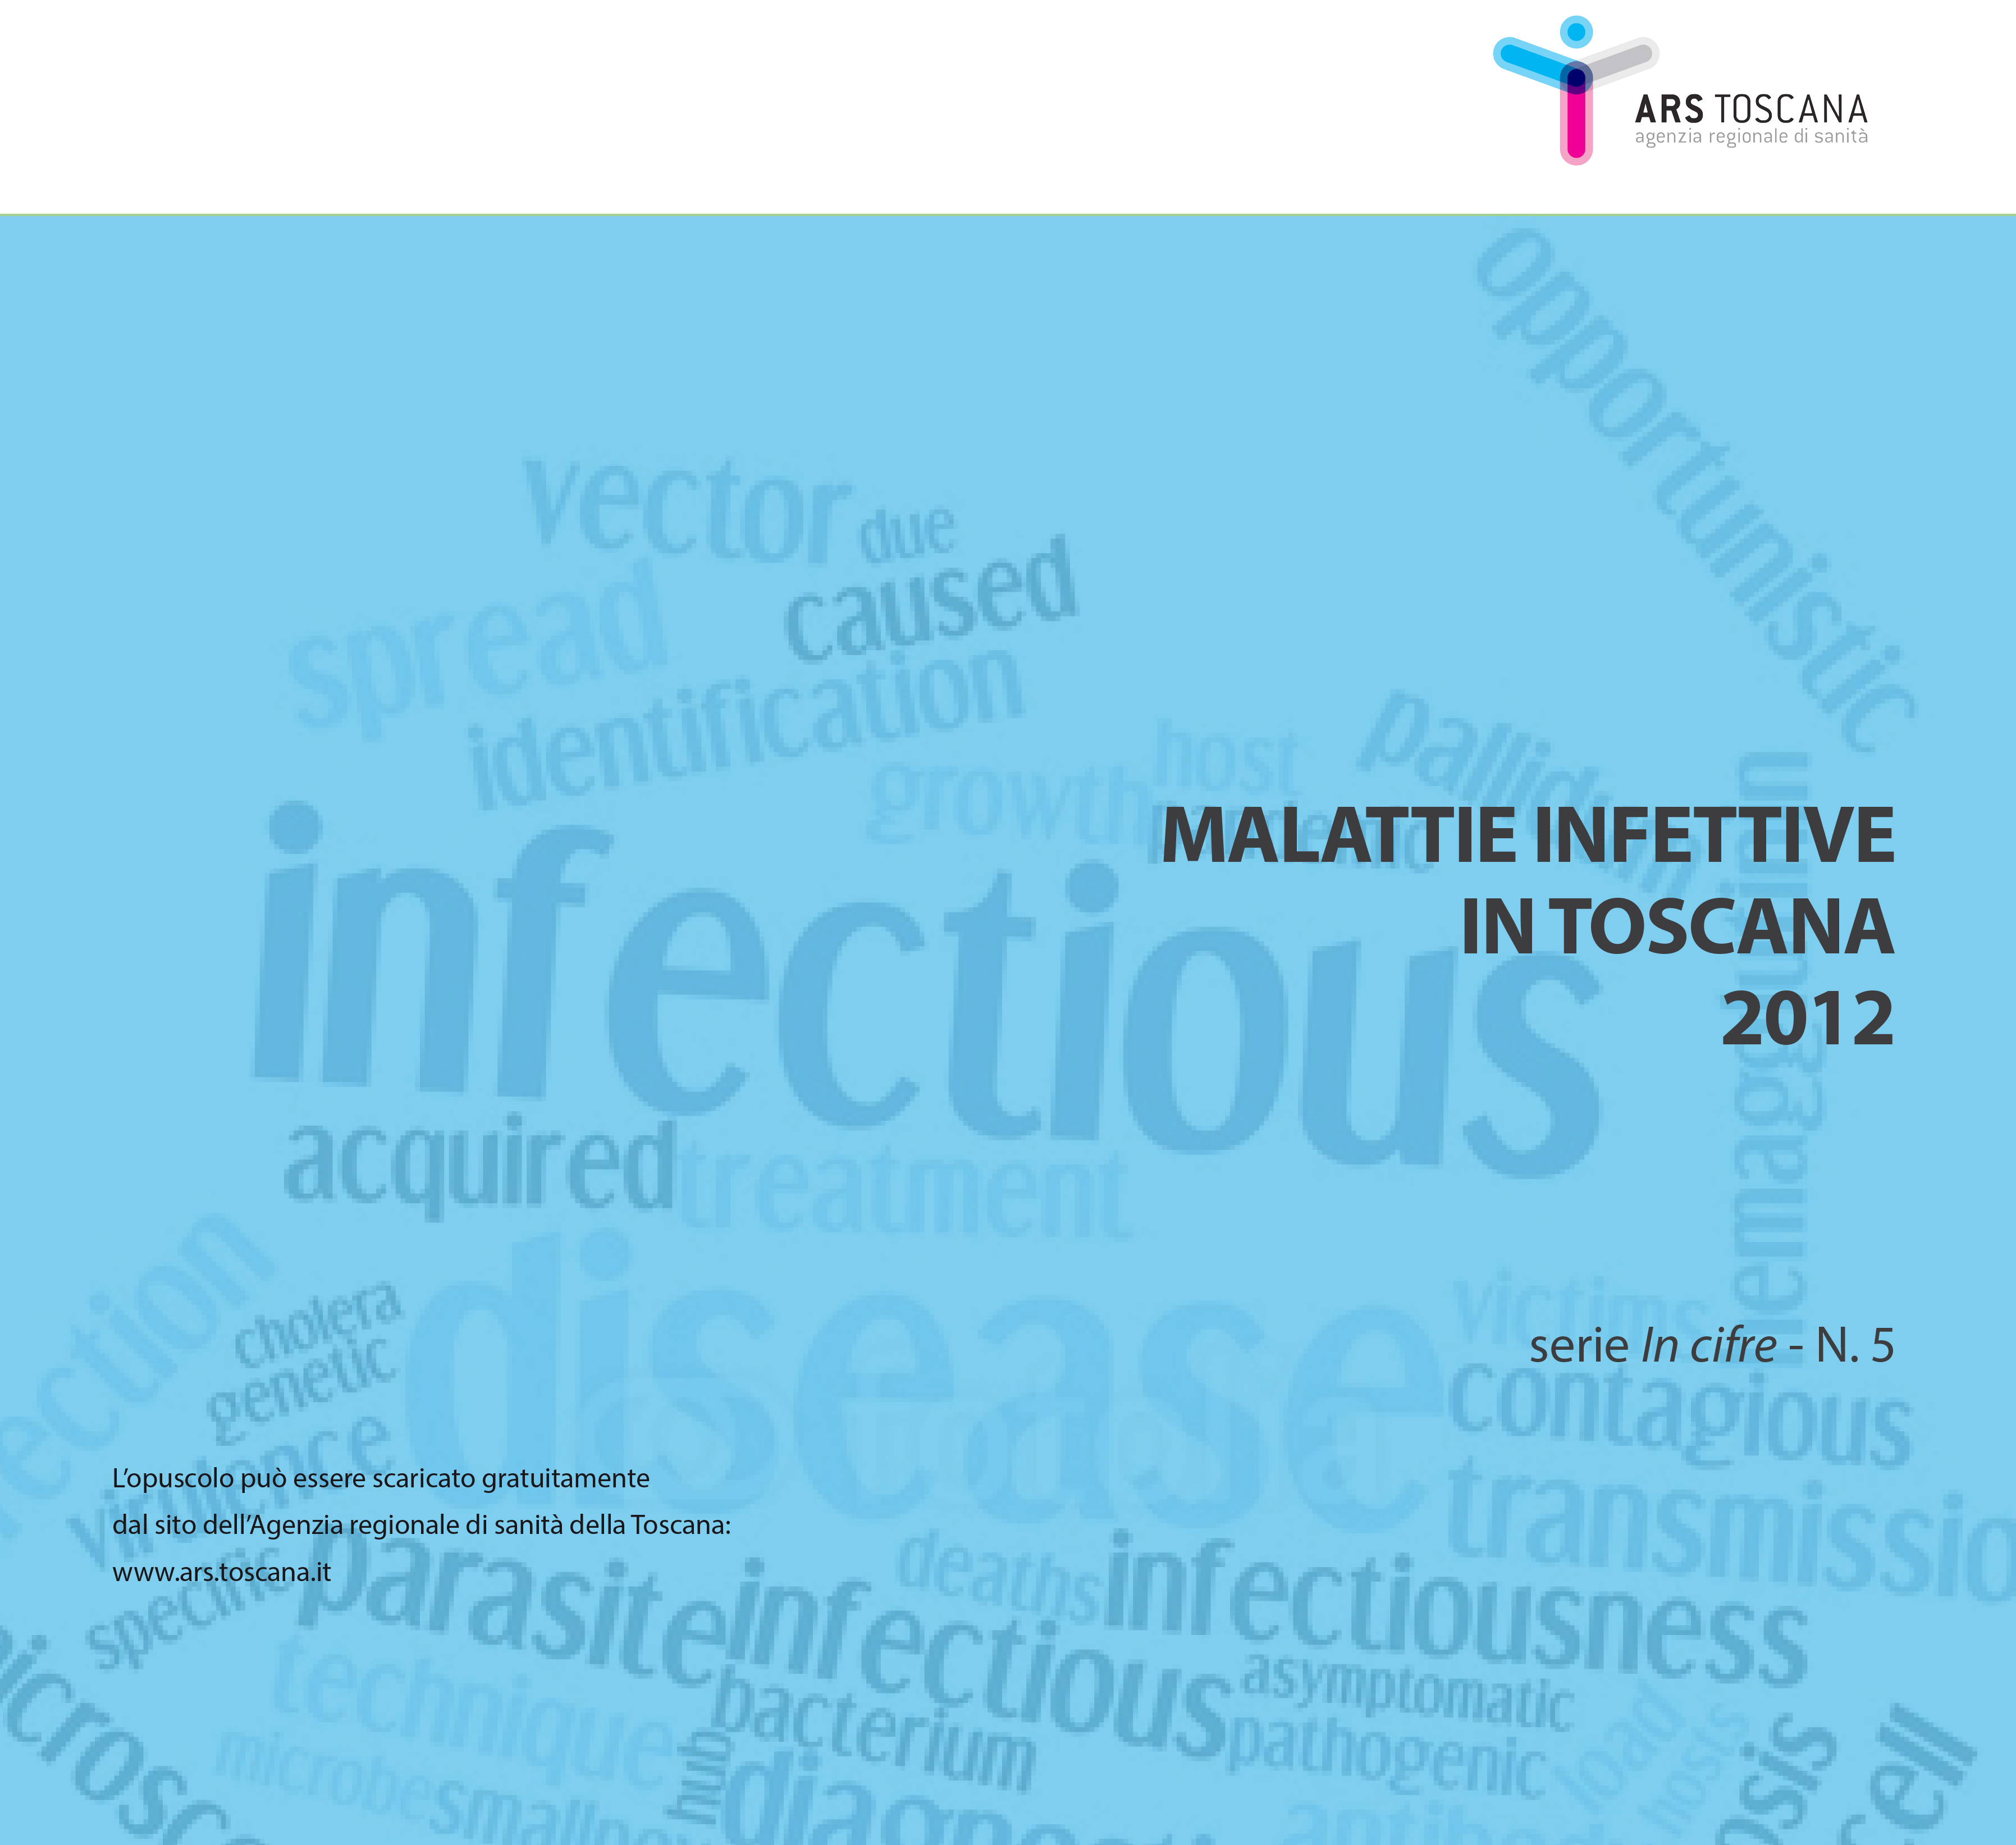 Malattie infettive in Toscana 2012